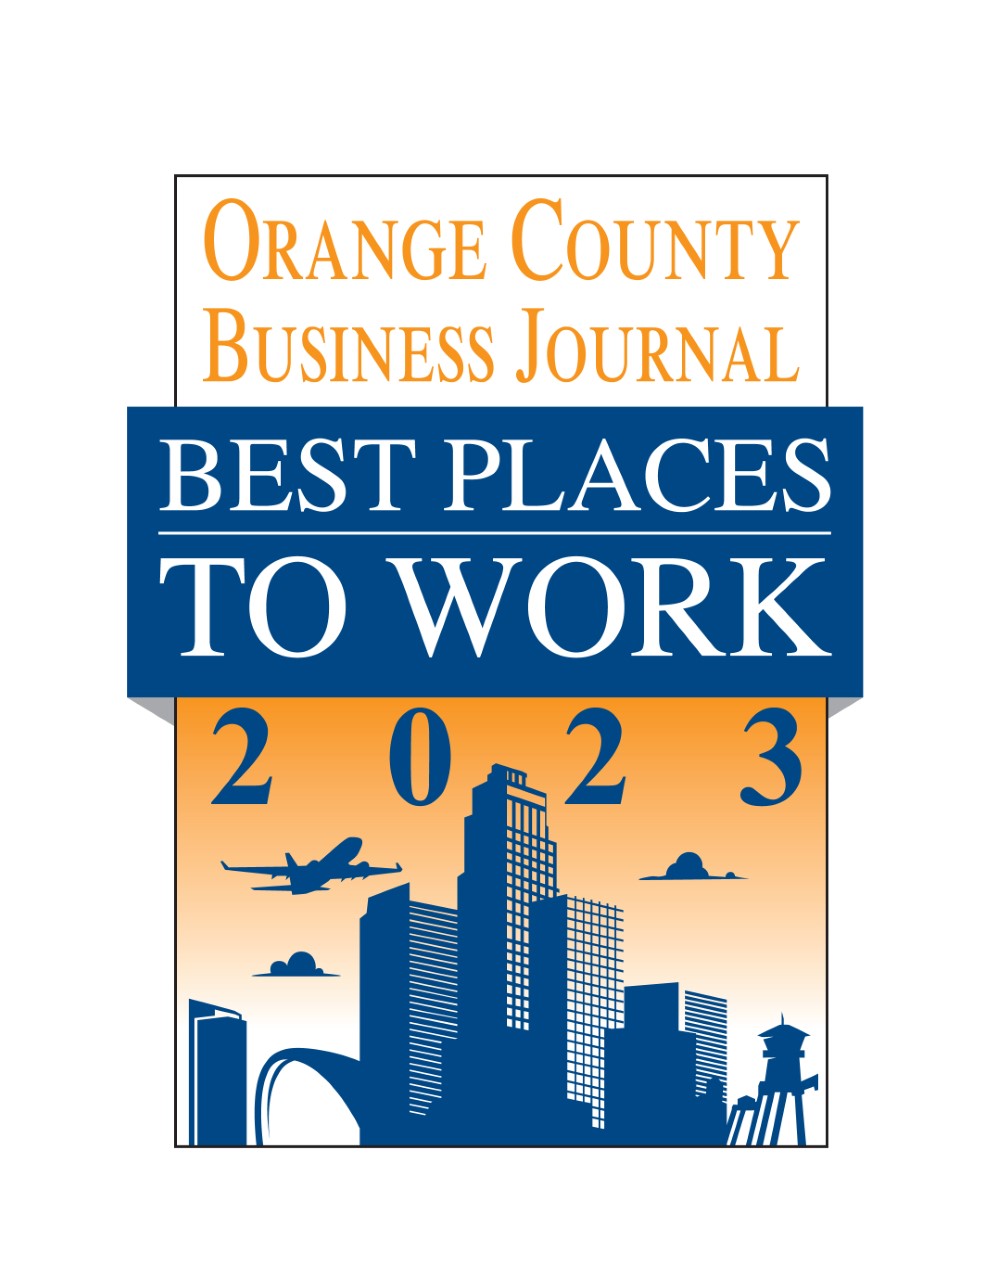 Business Guide 2023 by Oswego County Business Magazine: Business